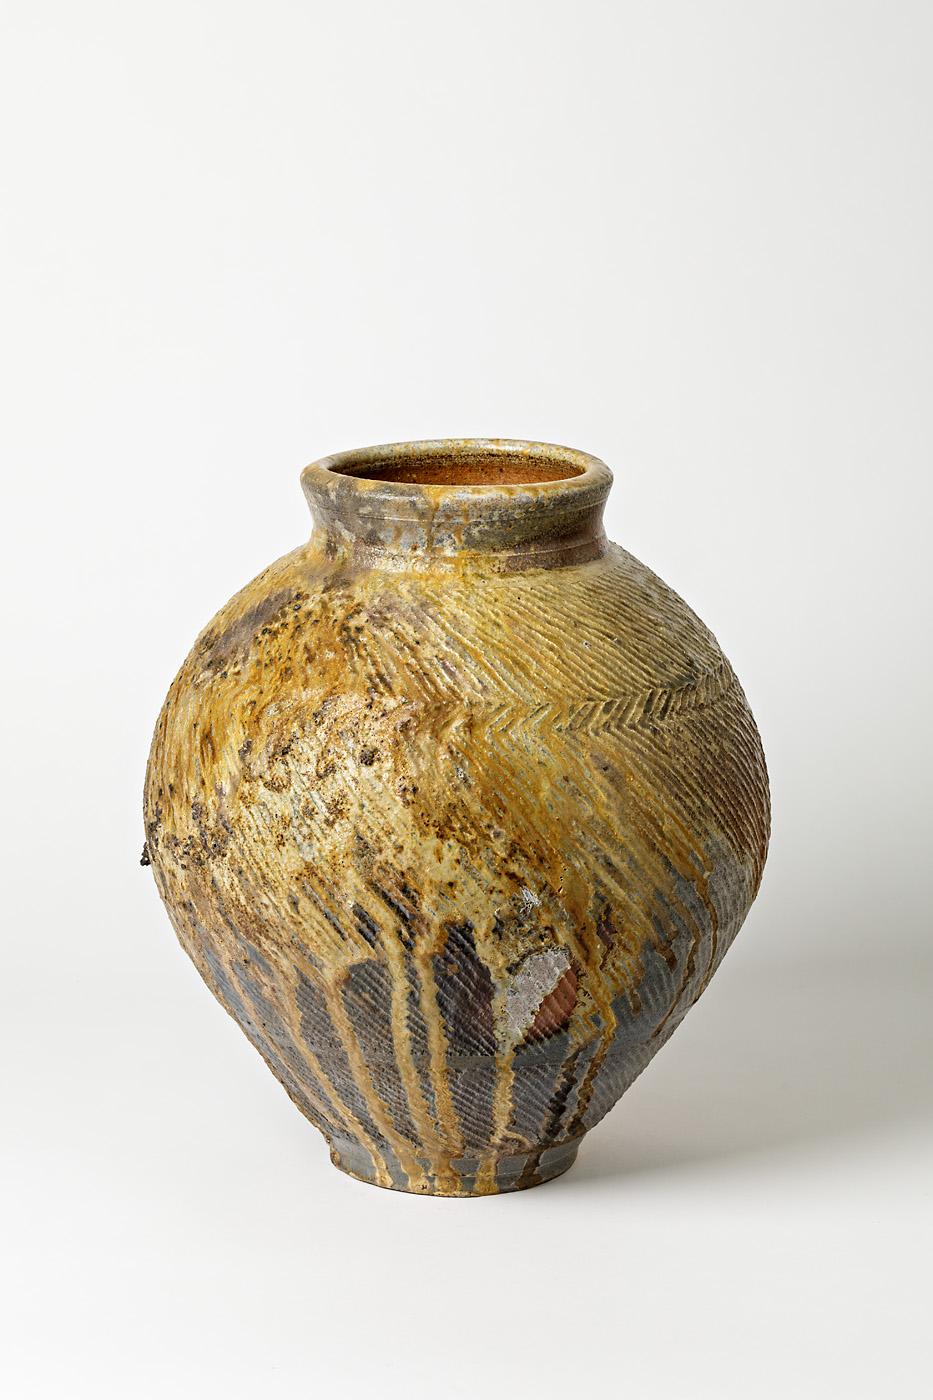 Ceramic Large Stoneware Pottery Vase by Steen Kepp Japanes Style, circa 1975